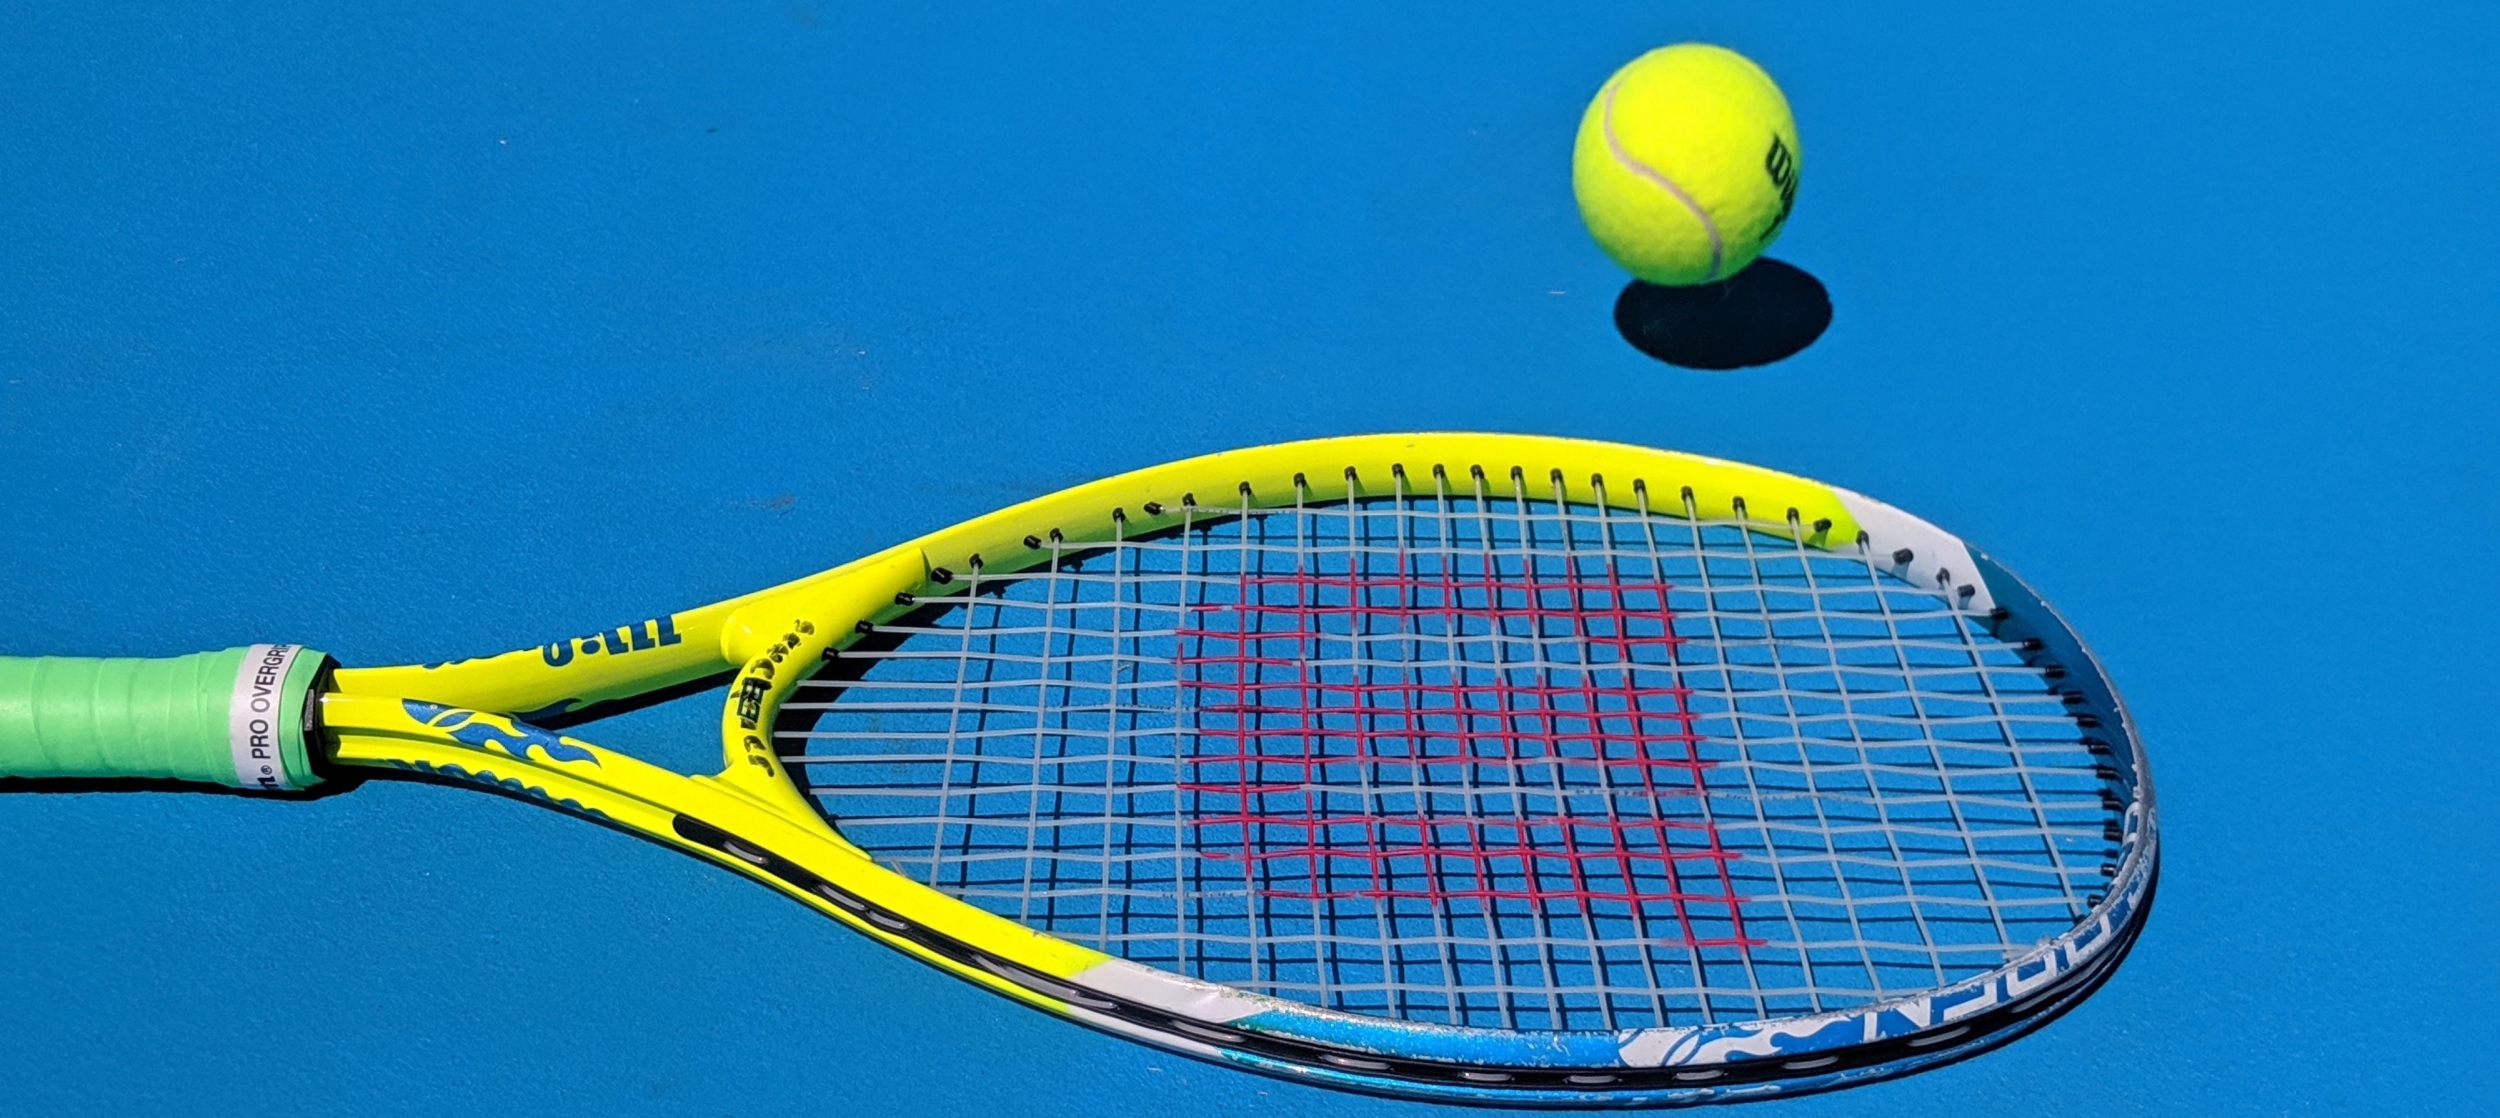 Image de Tennis